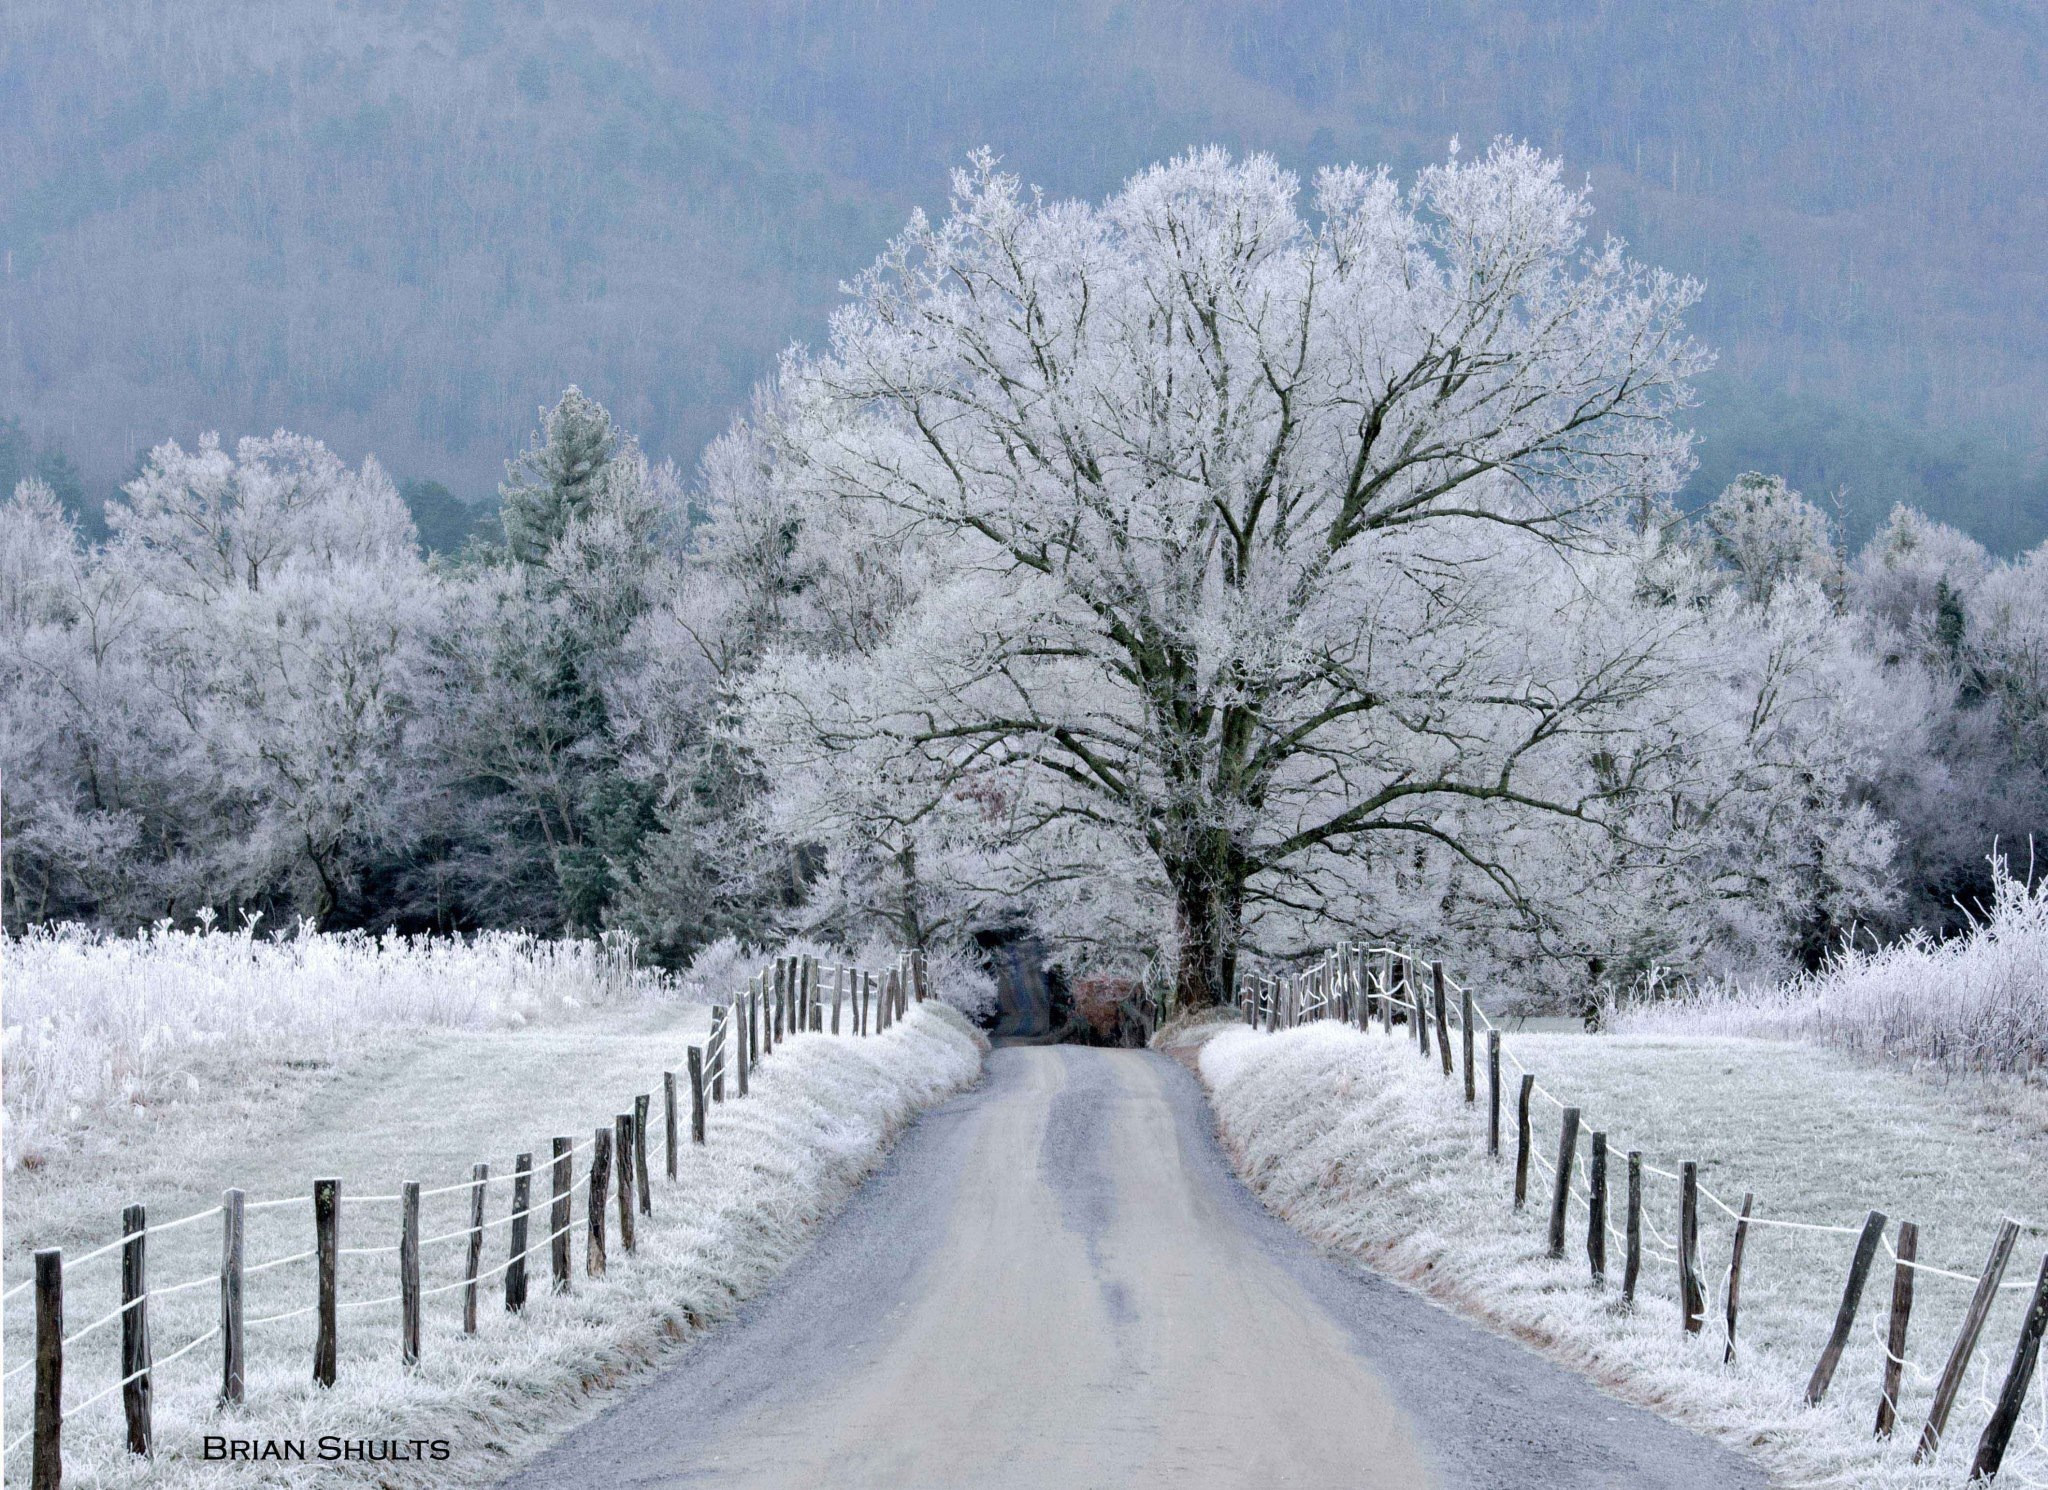 Smoky Mountain Winter Scenes Wallpaper 42 images